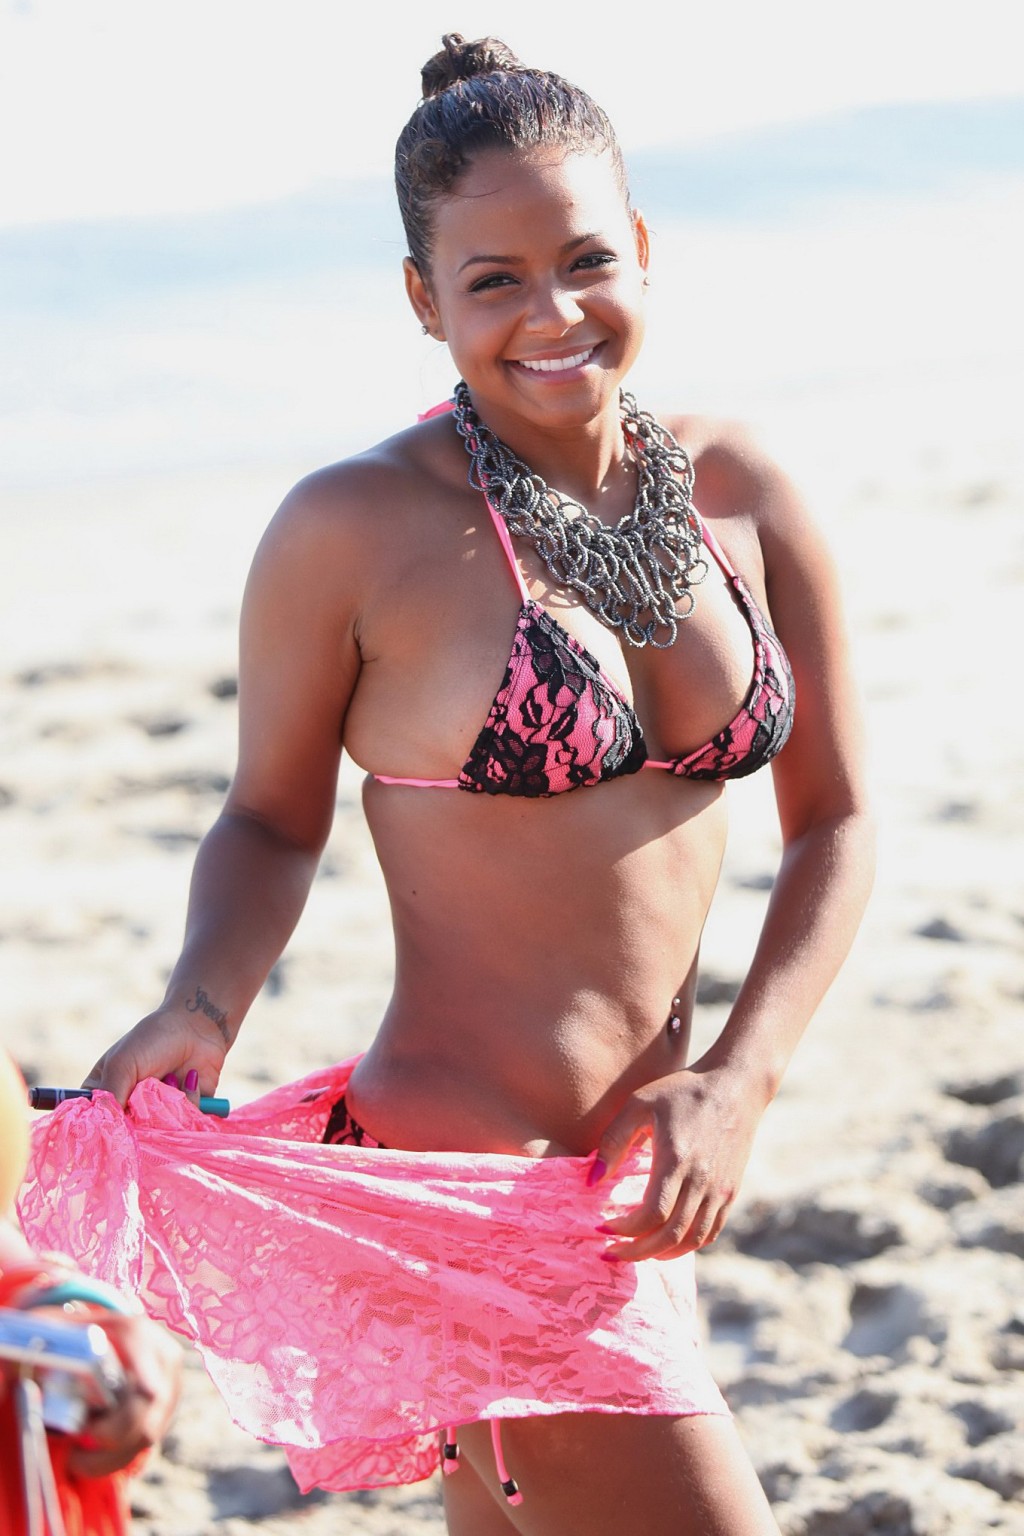 Christina milian mostrando su cuerpo en bikini en la playa de malibu
 #75290967